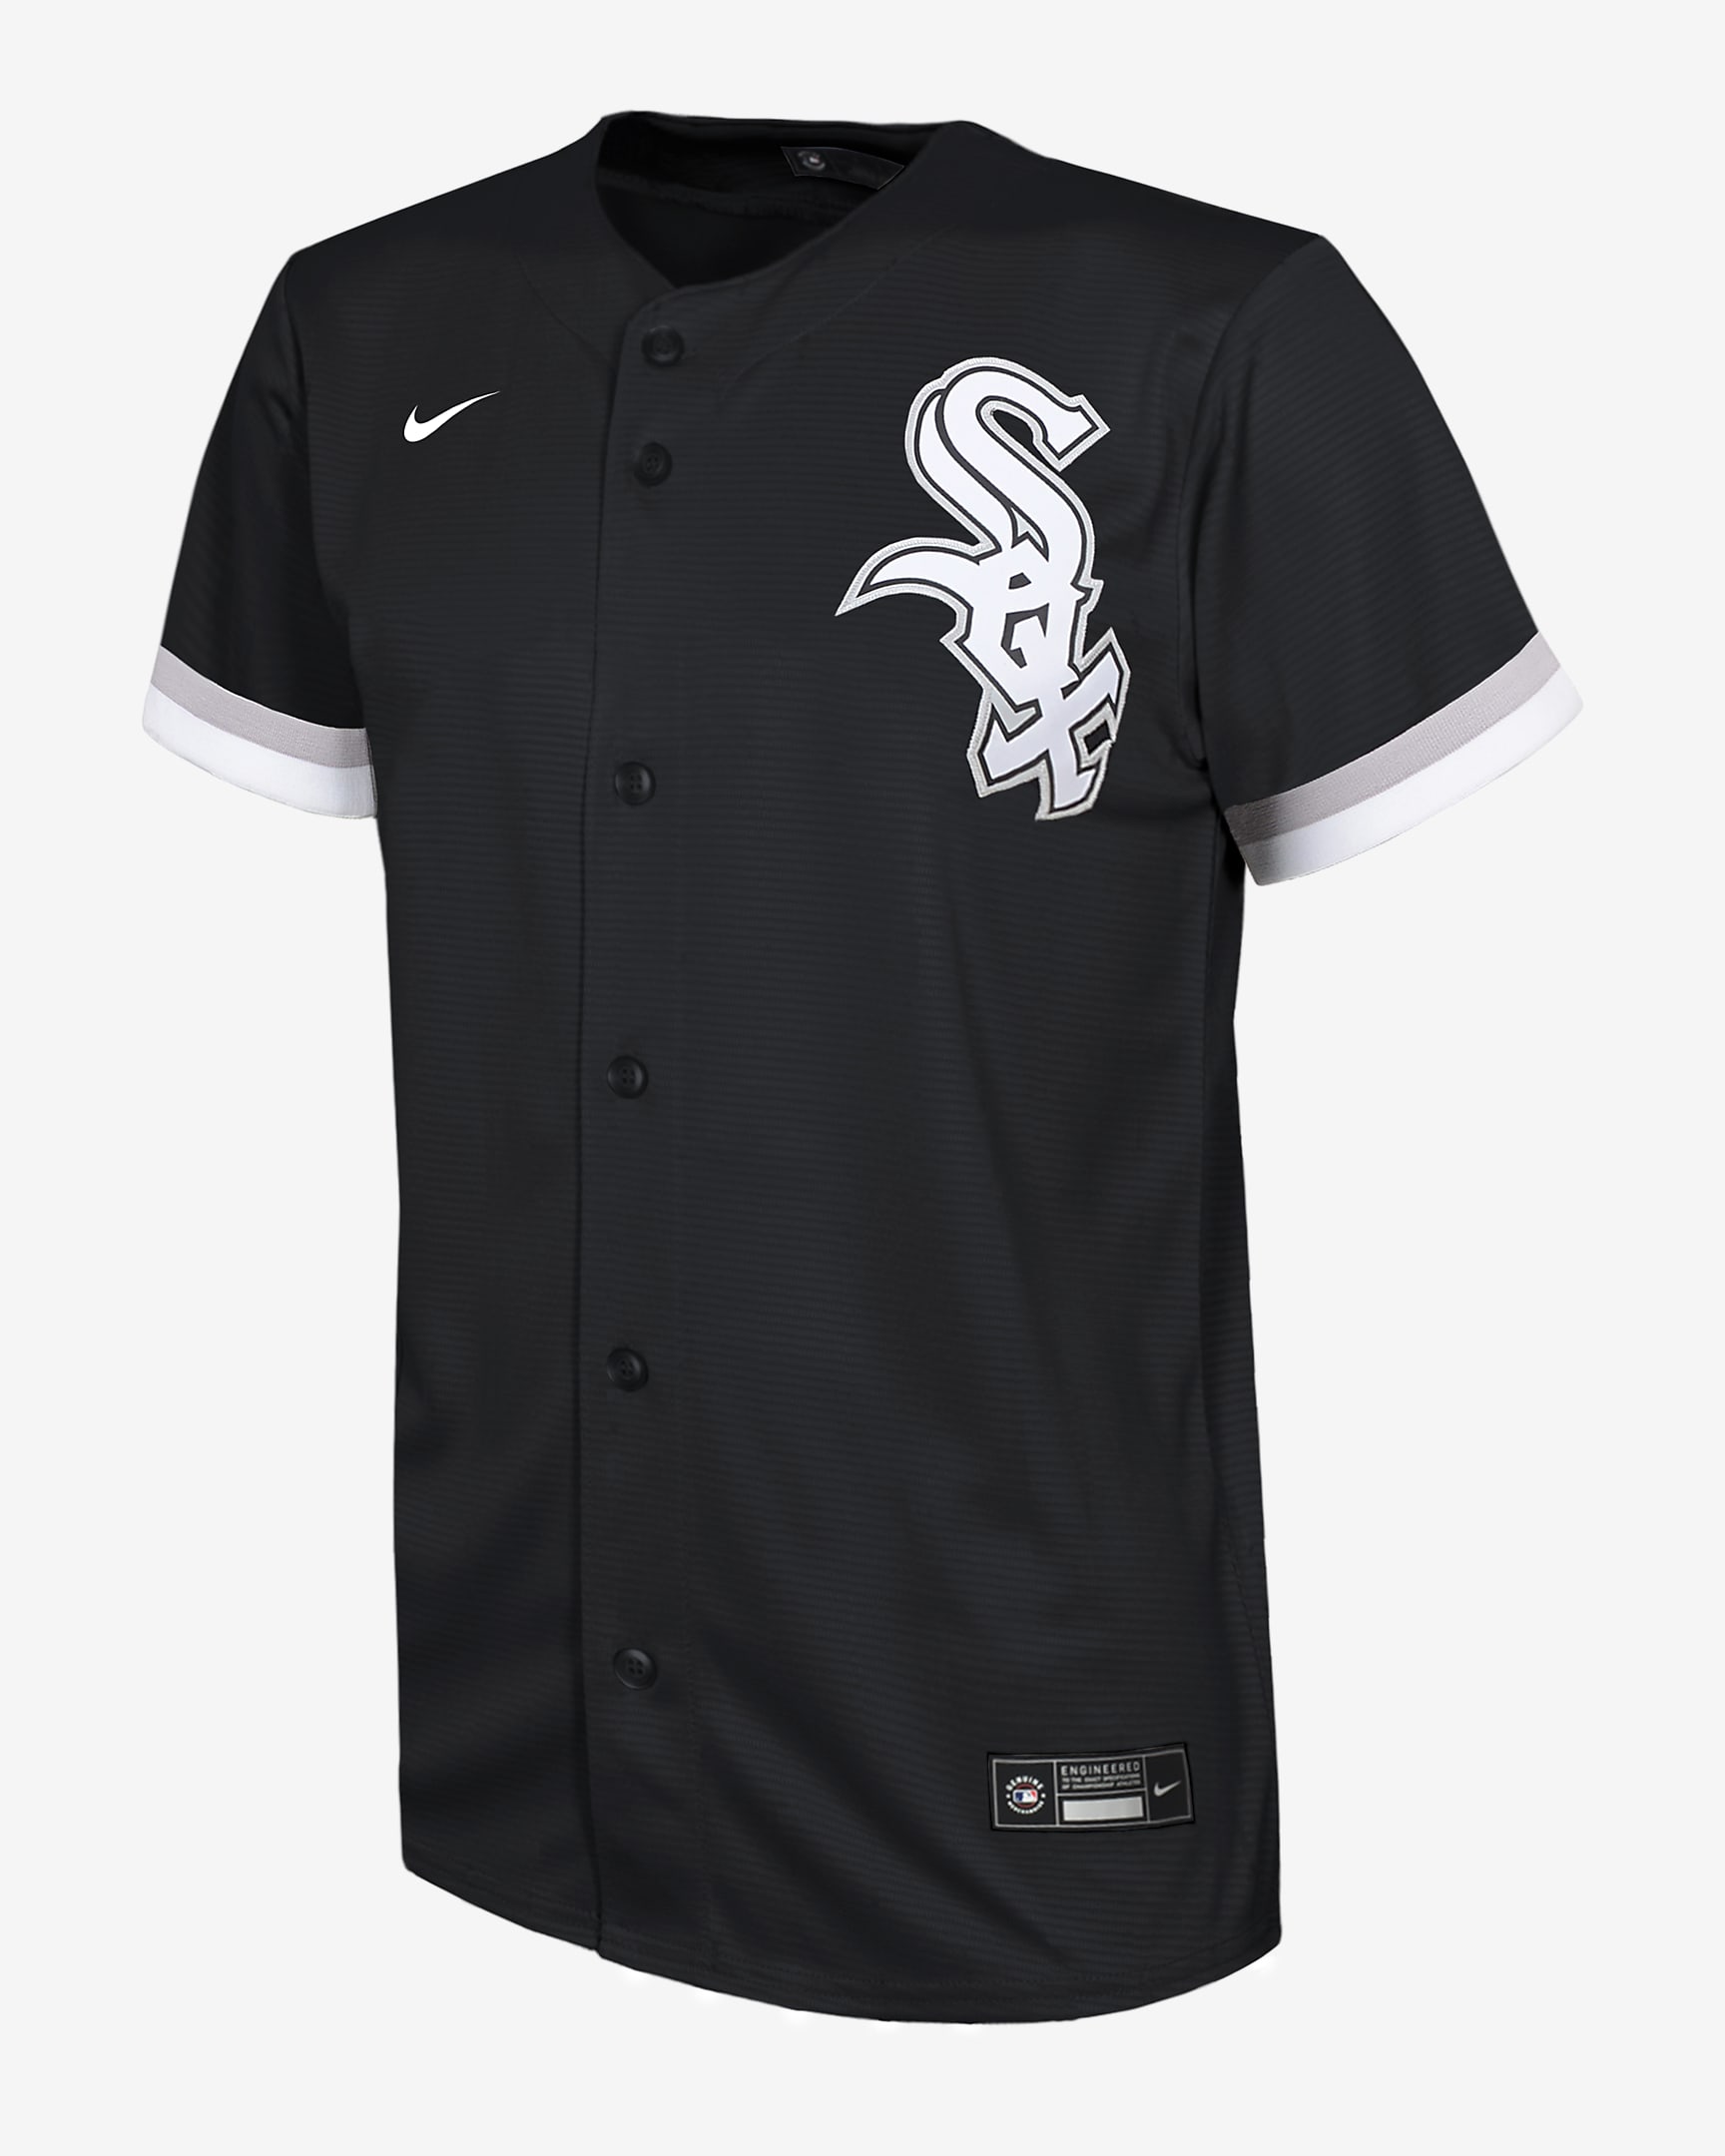 Jersey Nike de la MLB Replica para niños talla grande Chicago White Sox ...